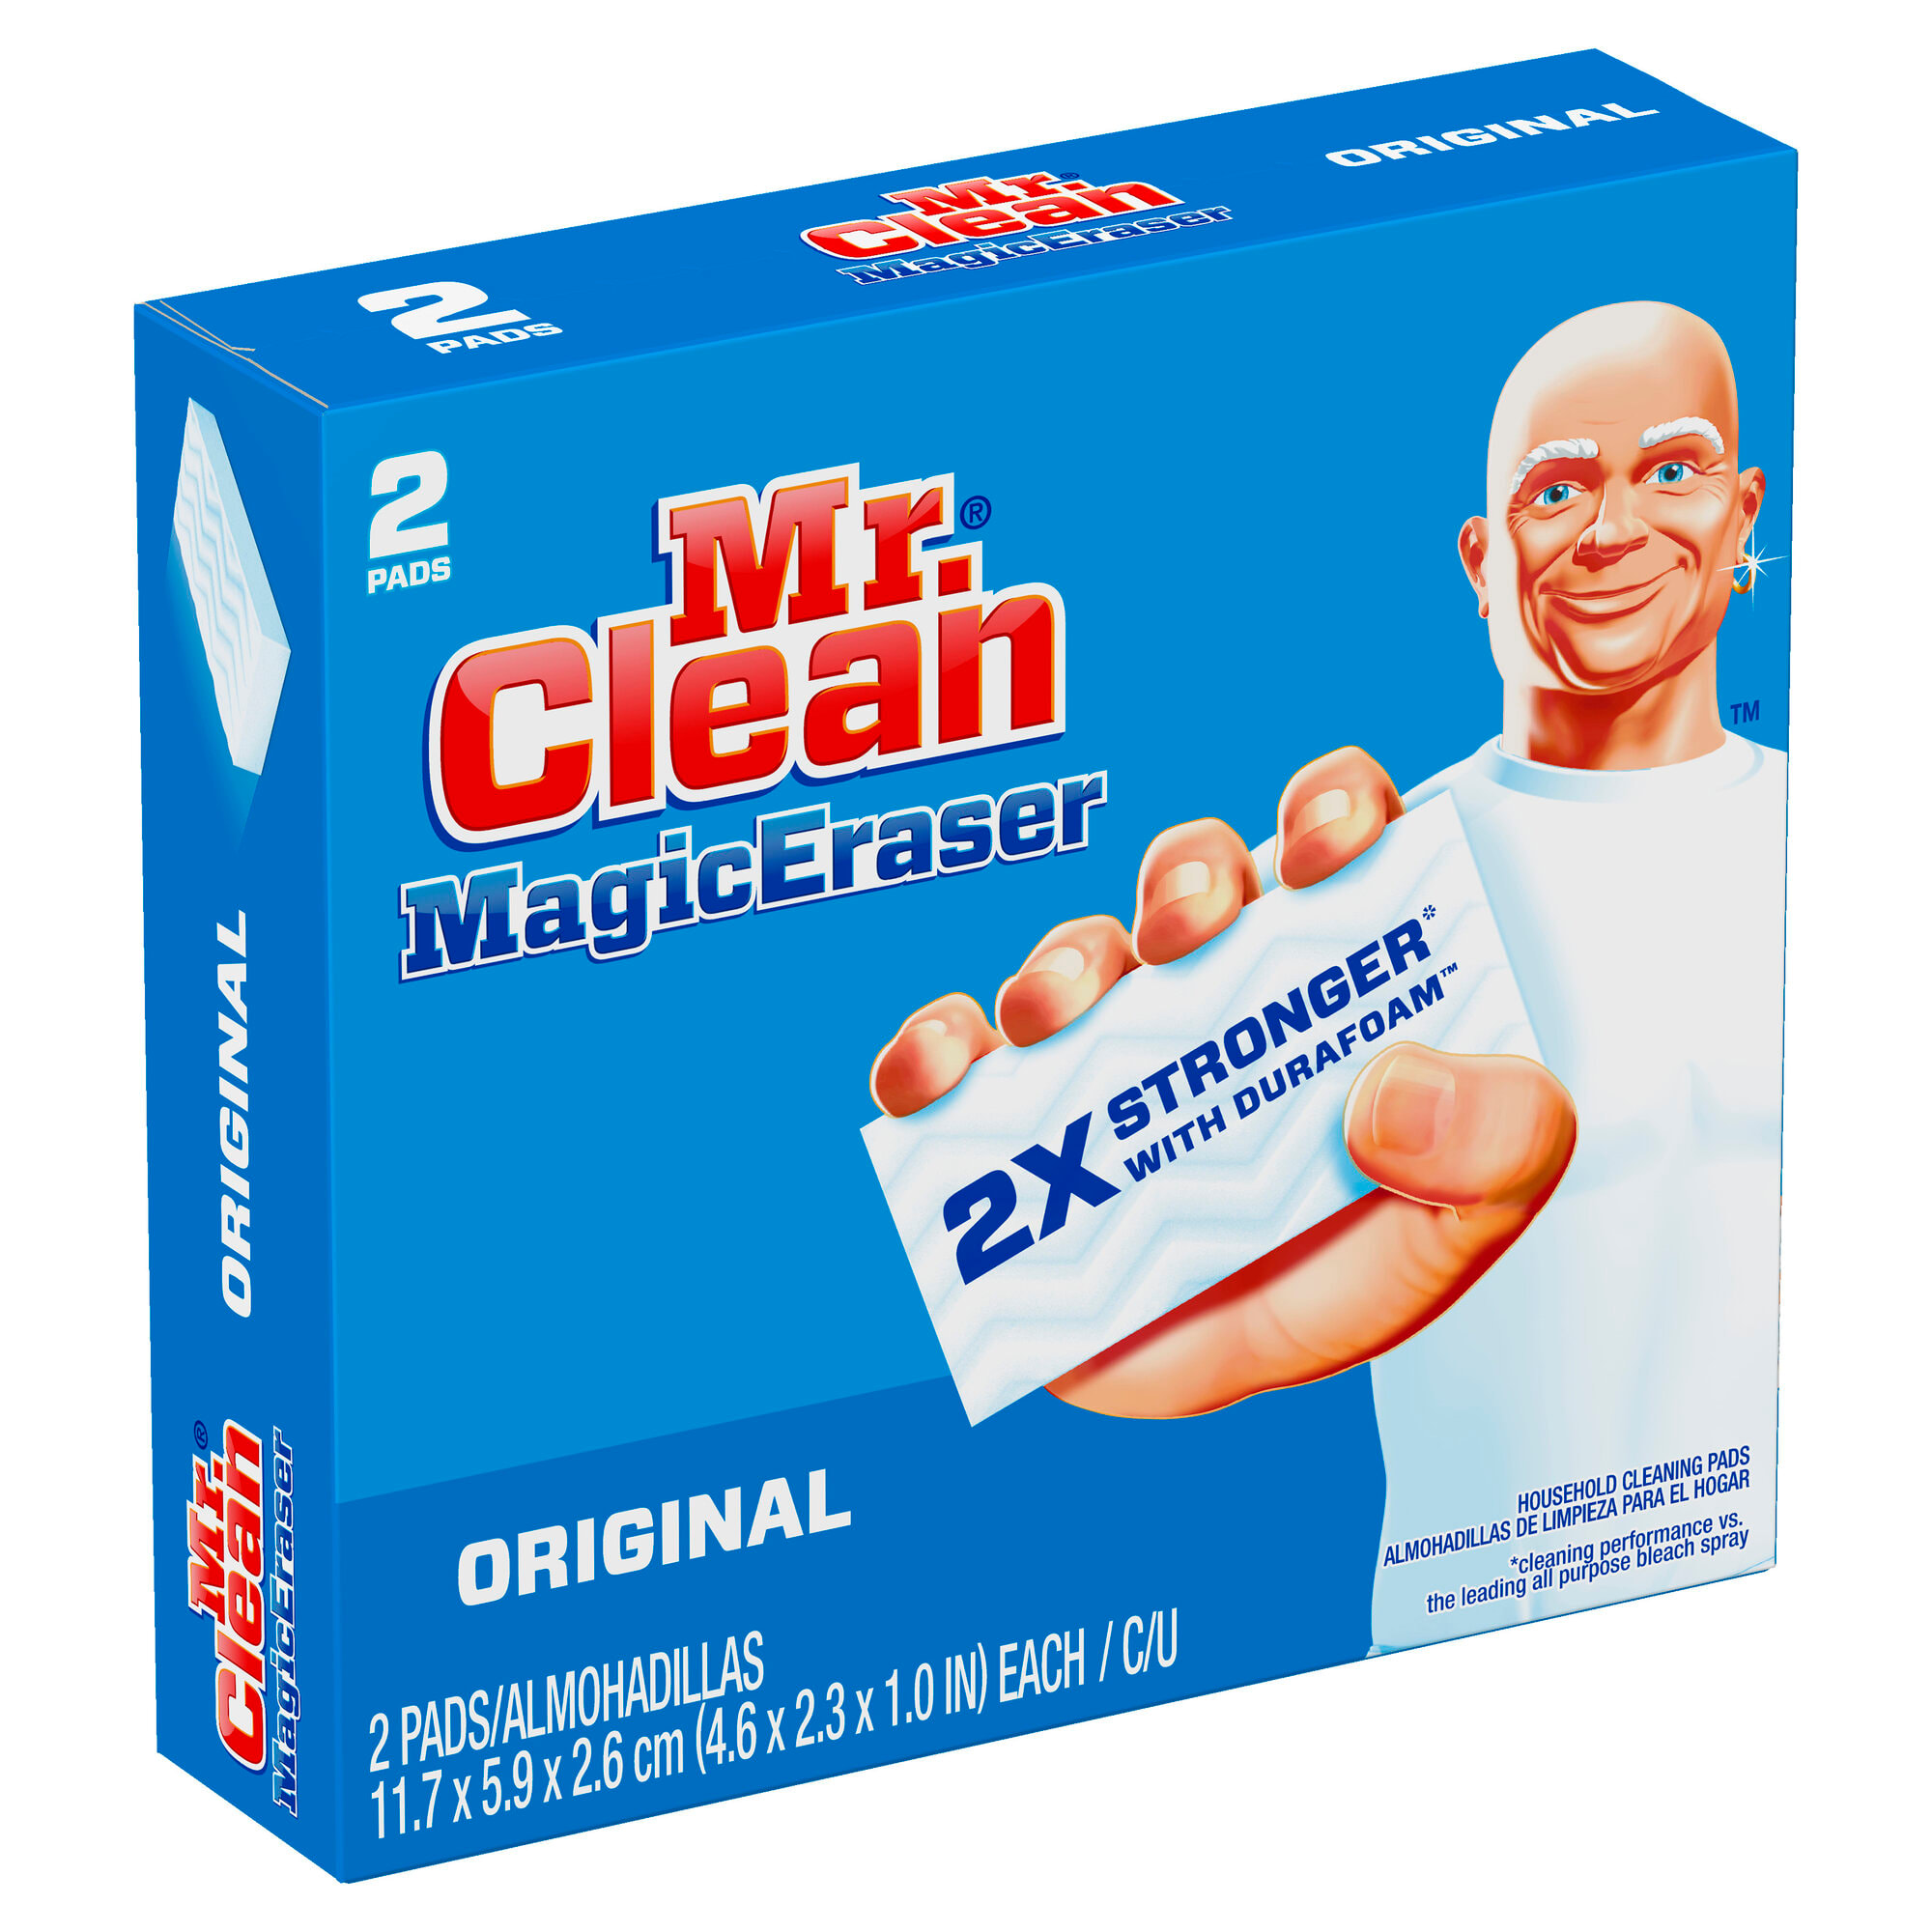 Mr Clean Magic Eraser Review 